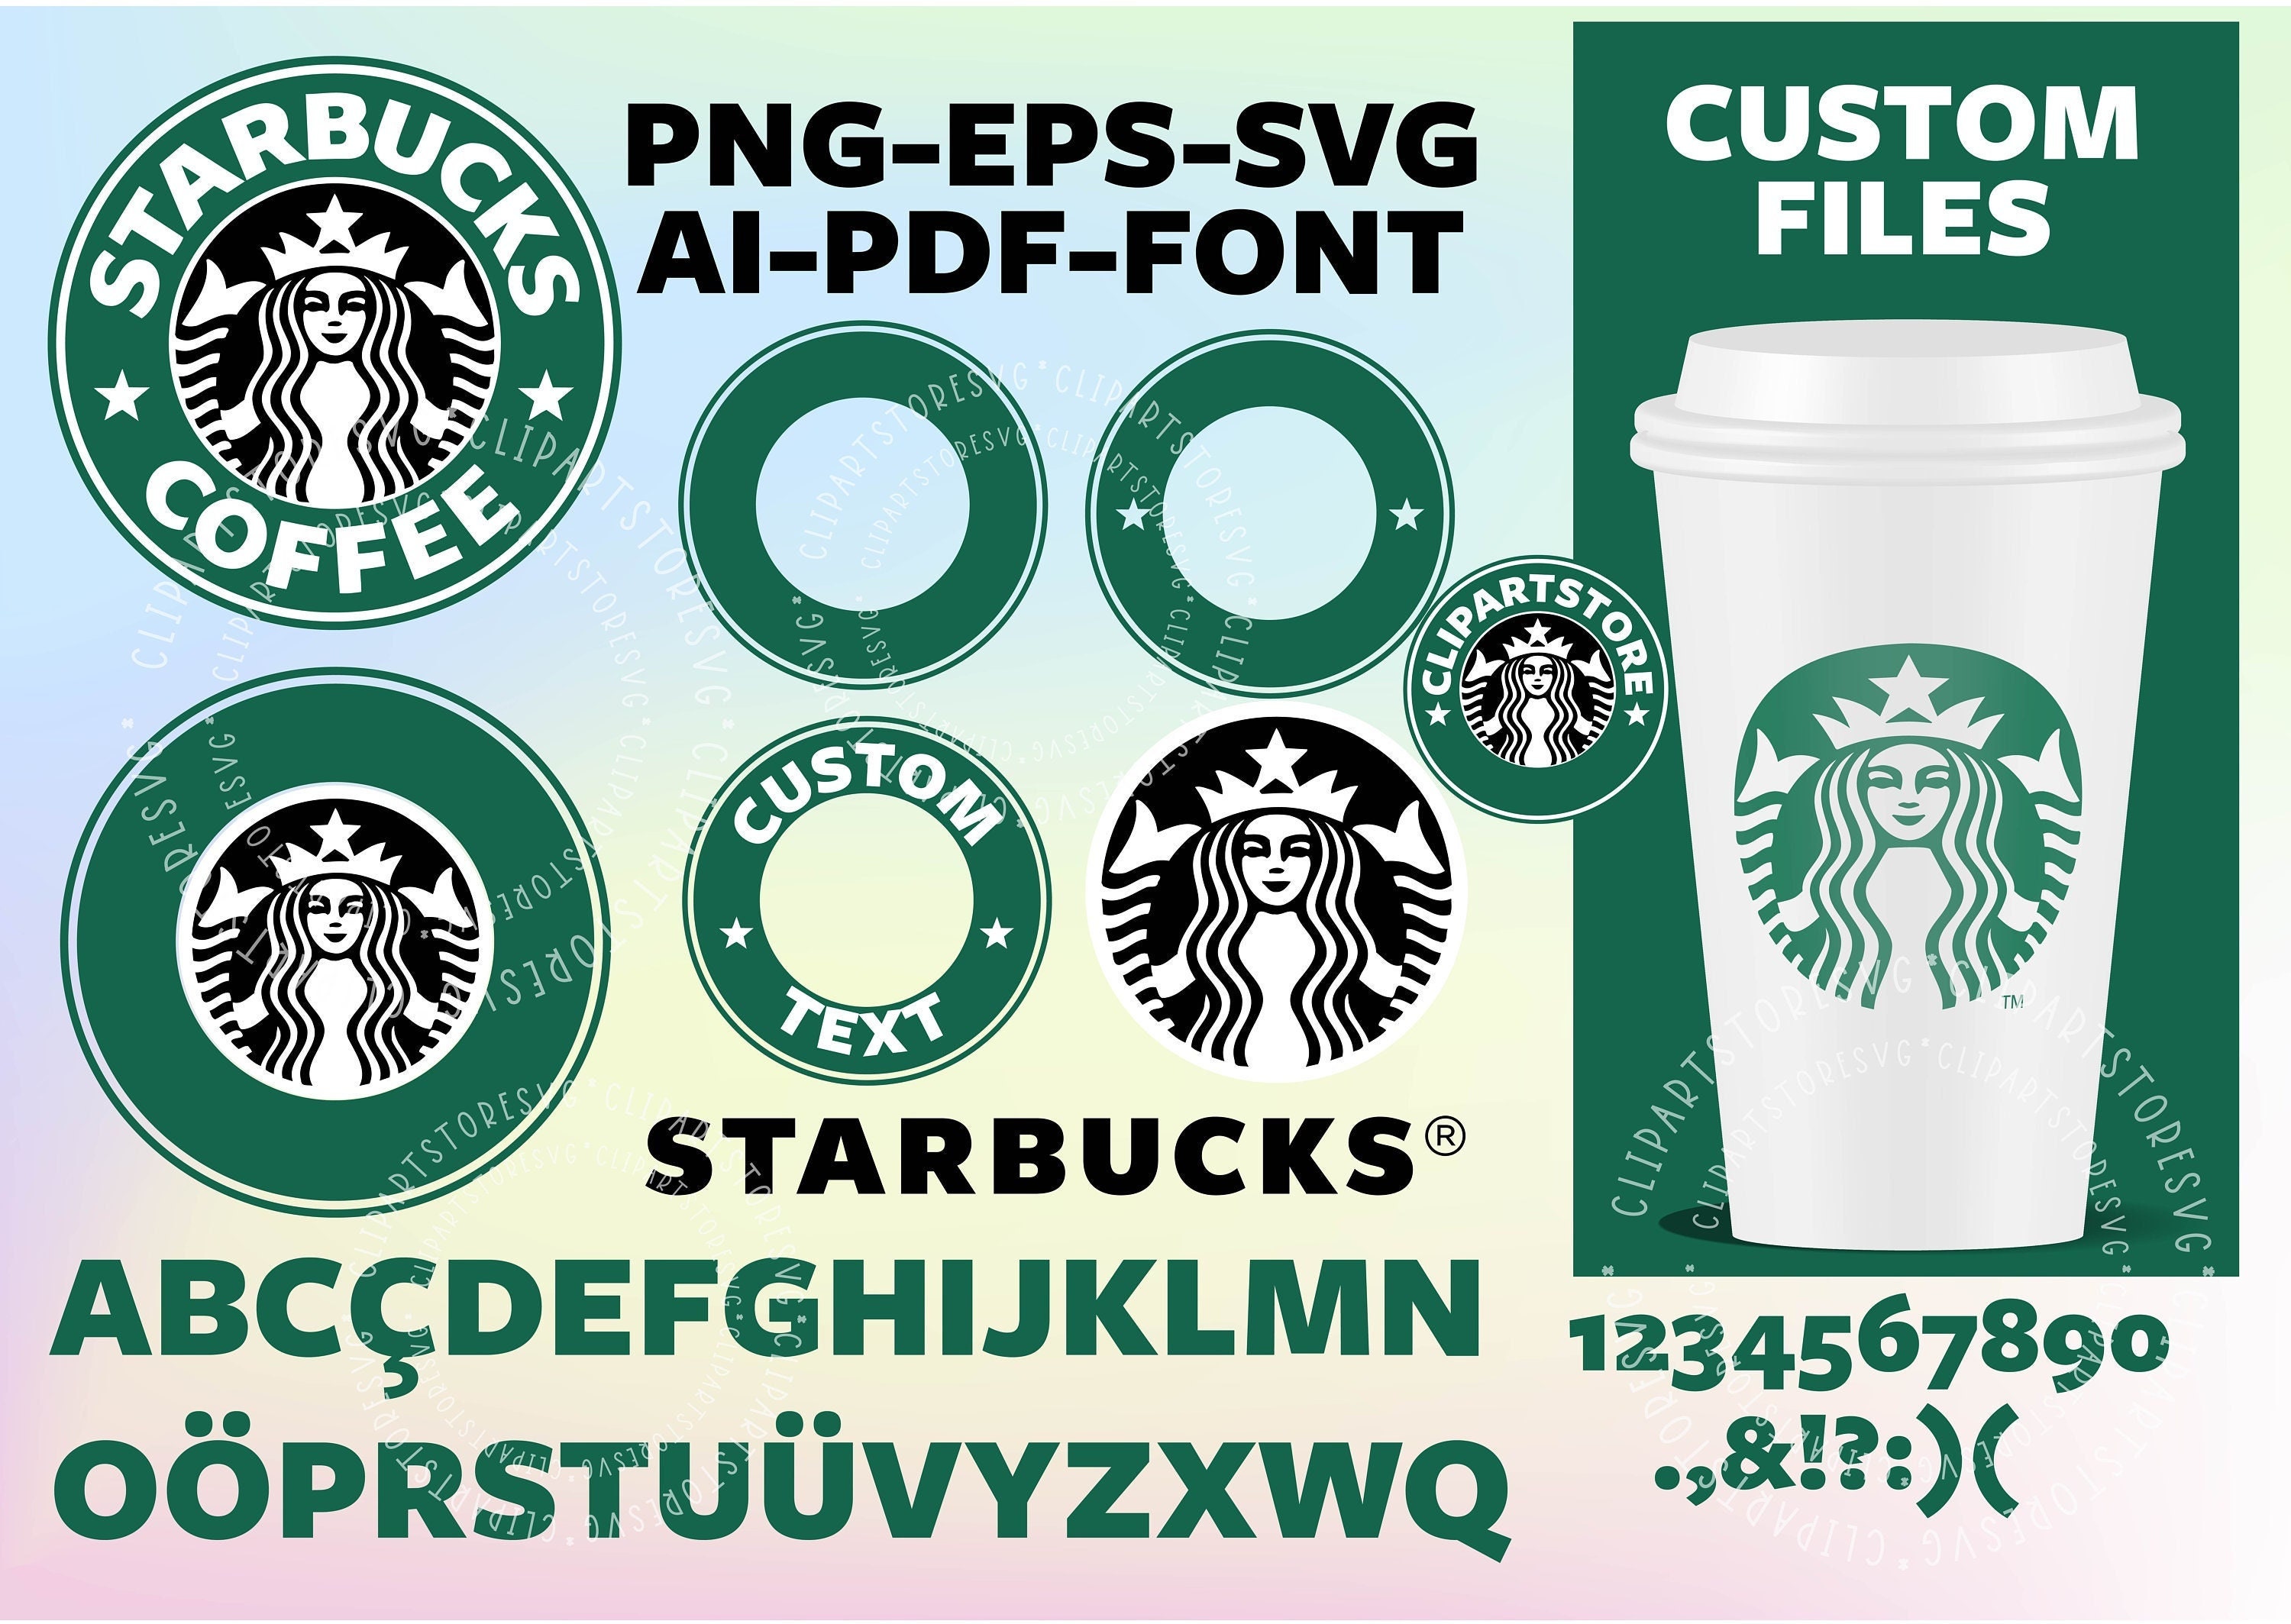 Starbucks Starbucks Coffee - Cup - Patch Keychains Stickers - giga